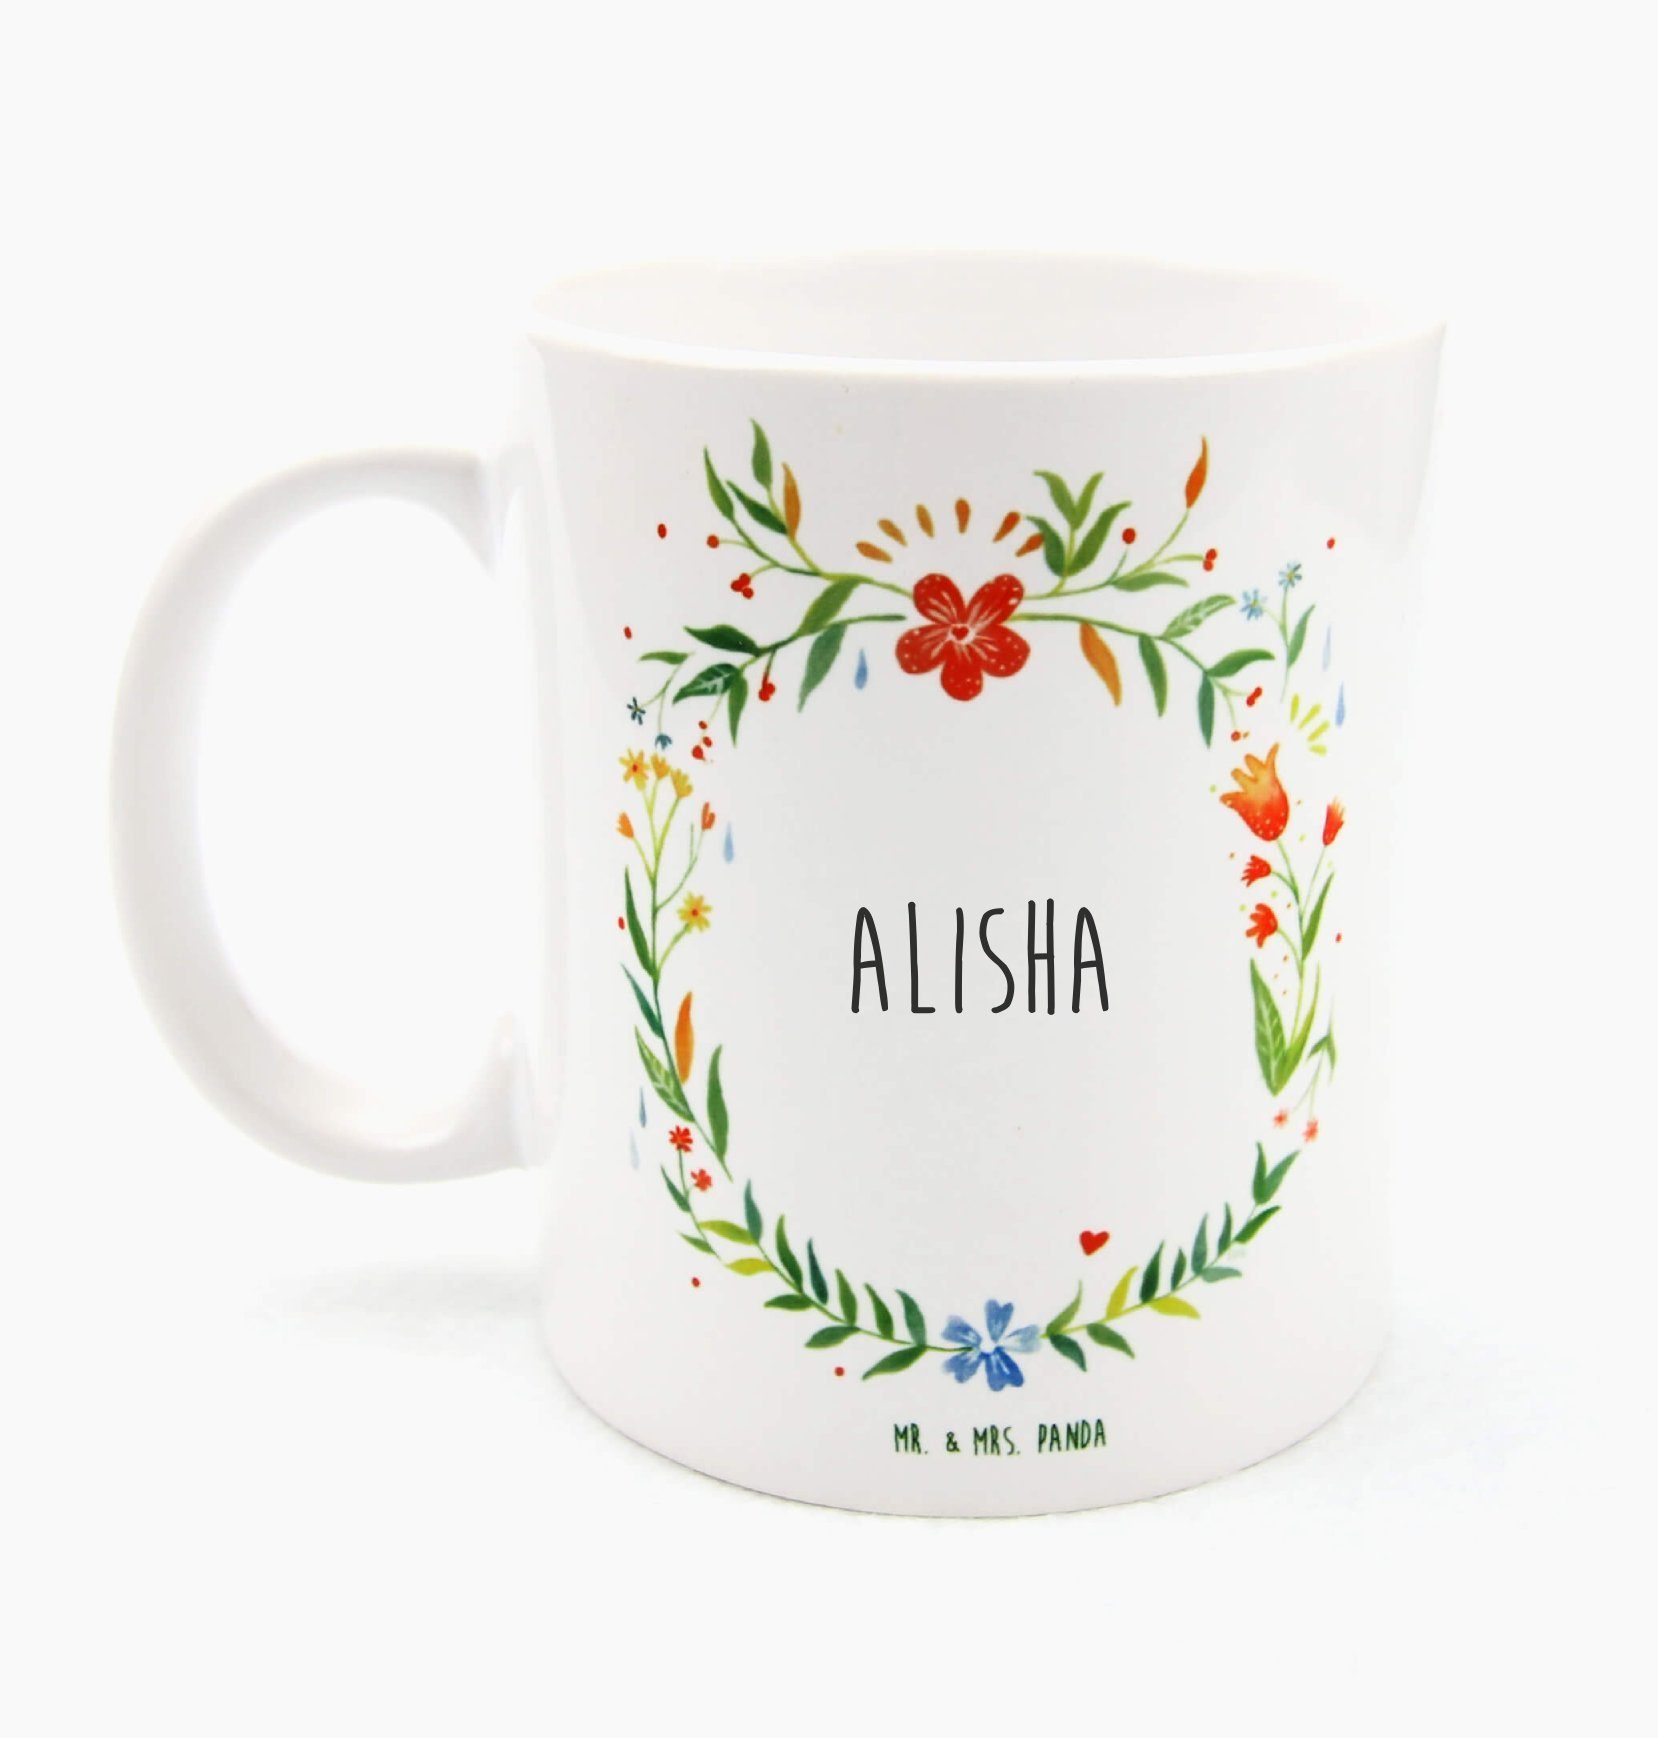 Mr. & Mrs. Panda Tasse Alisha - Geschenk, Teetasse, Becher, Büro Tasse, Teebecher, Kaffeetas, Keramik